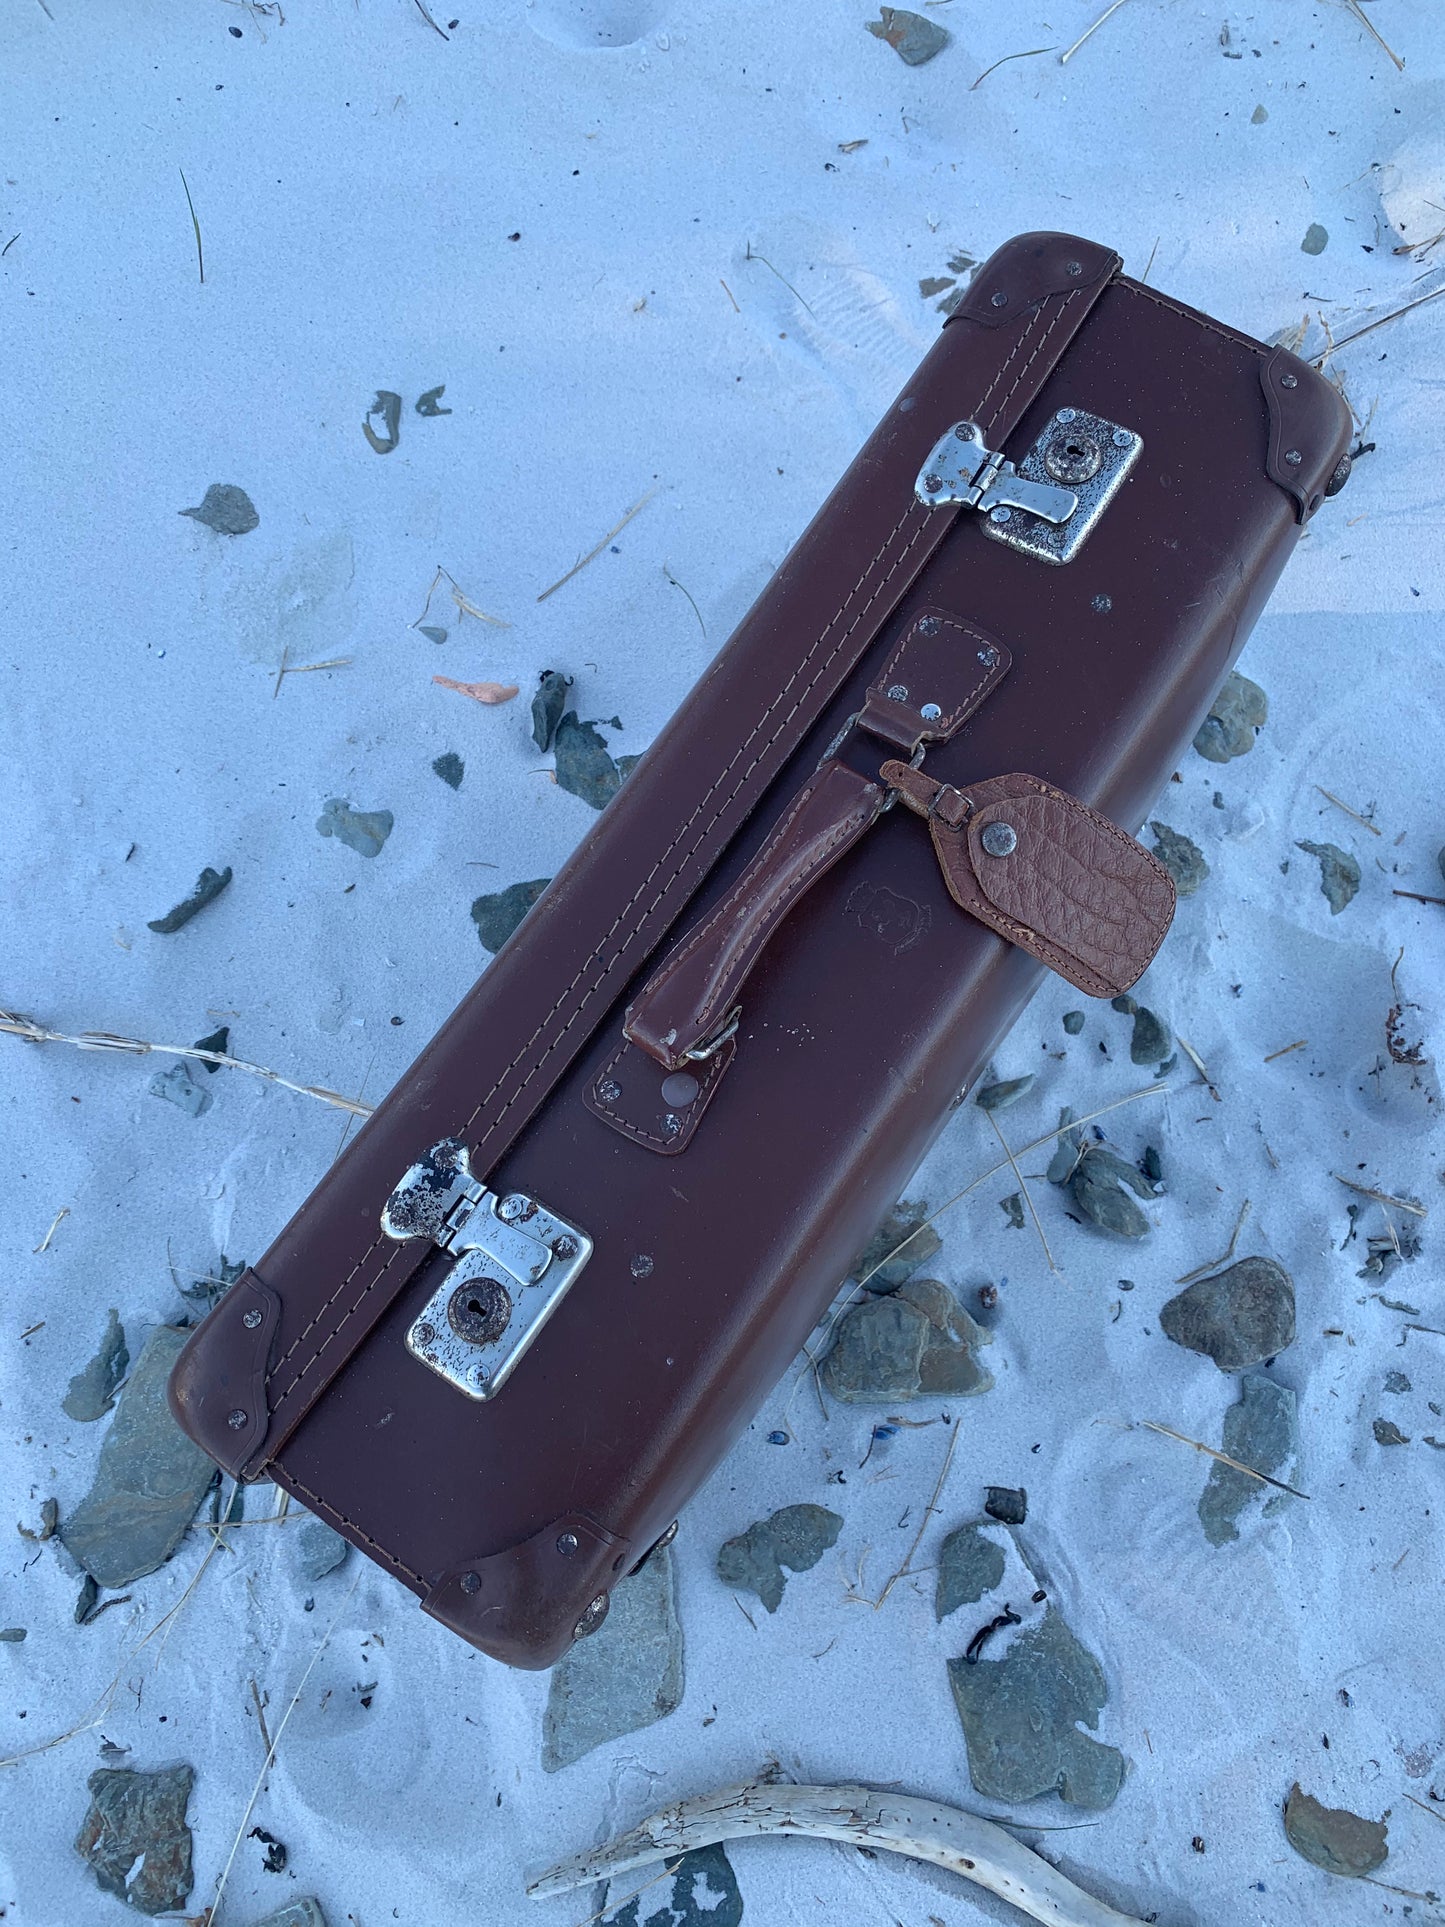 Schöner alter Koffer